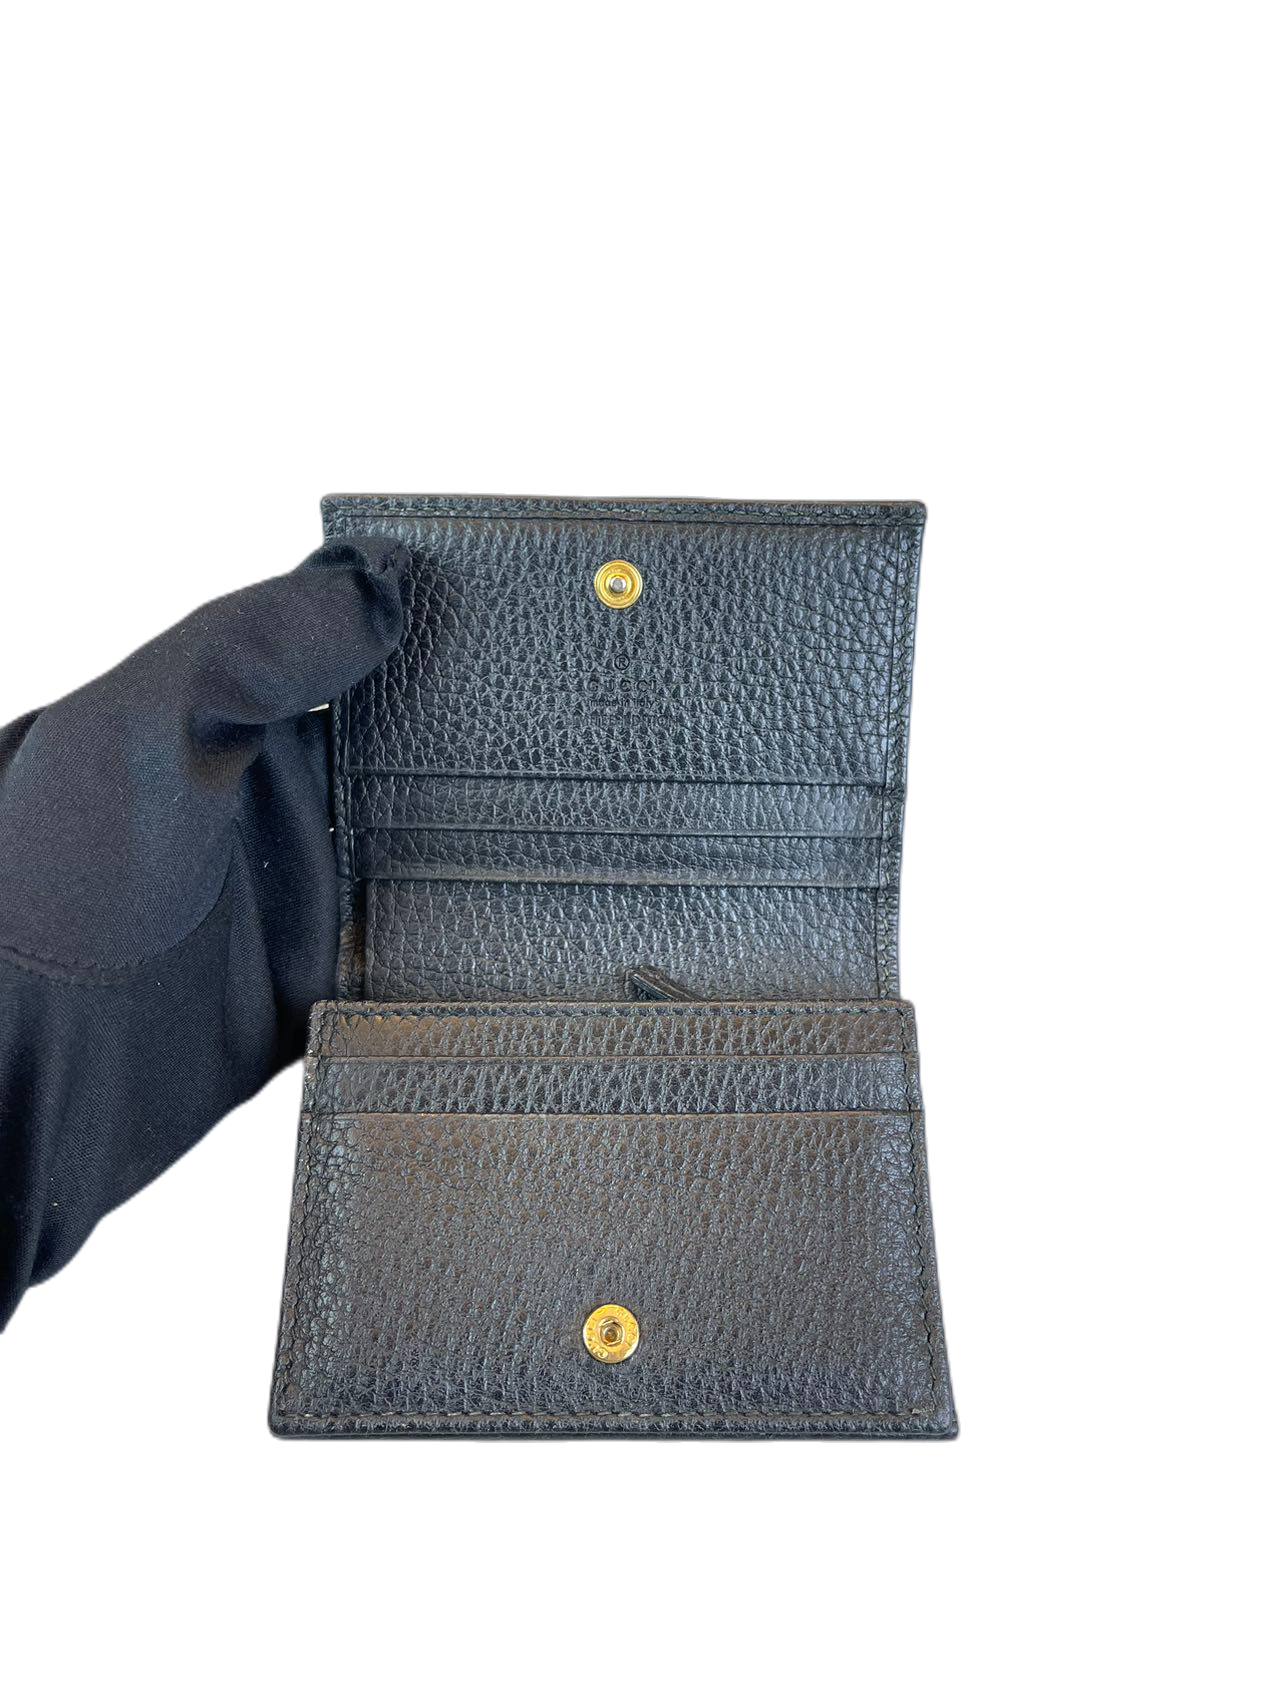 Preloved Gucci GG Logo Black leather Wallet